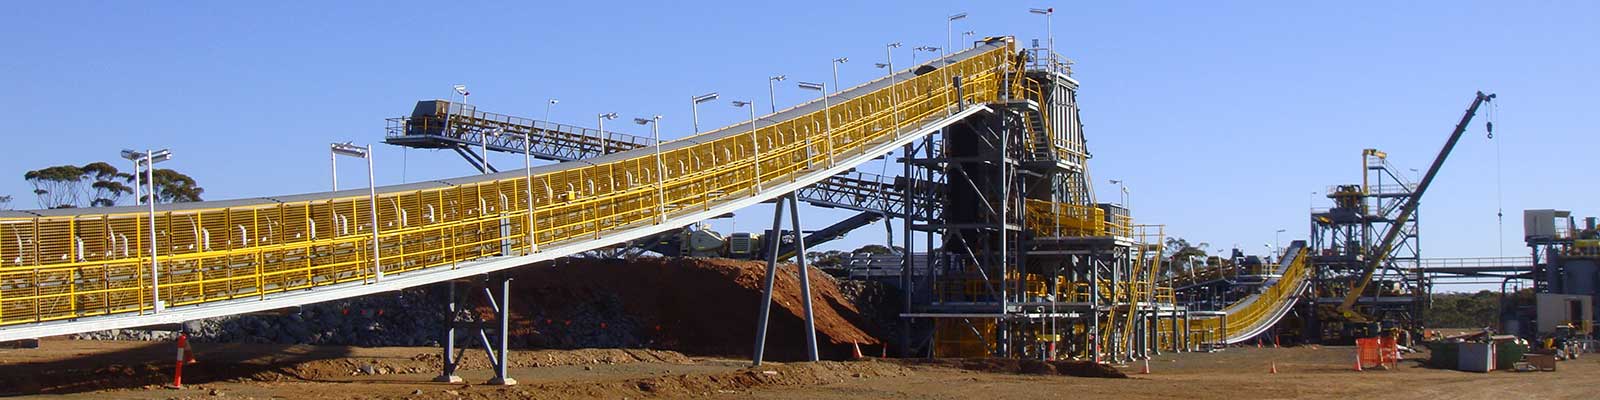 Nova Nickel Mine in Fraser Range, Western Australia